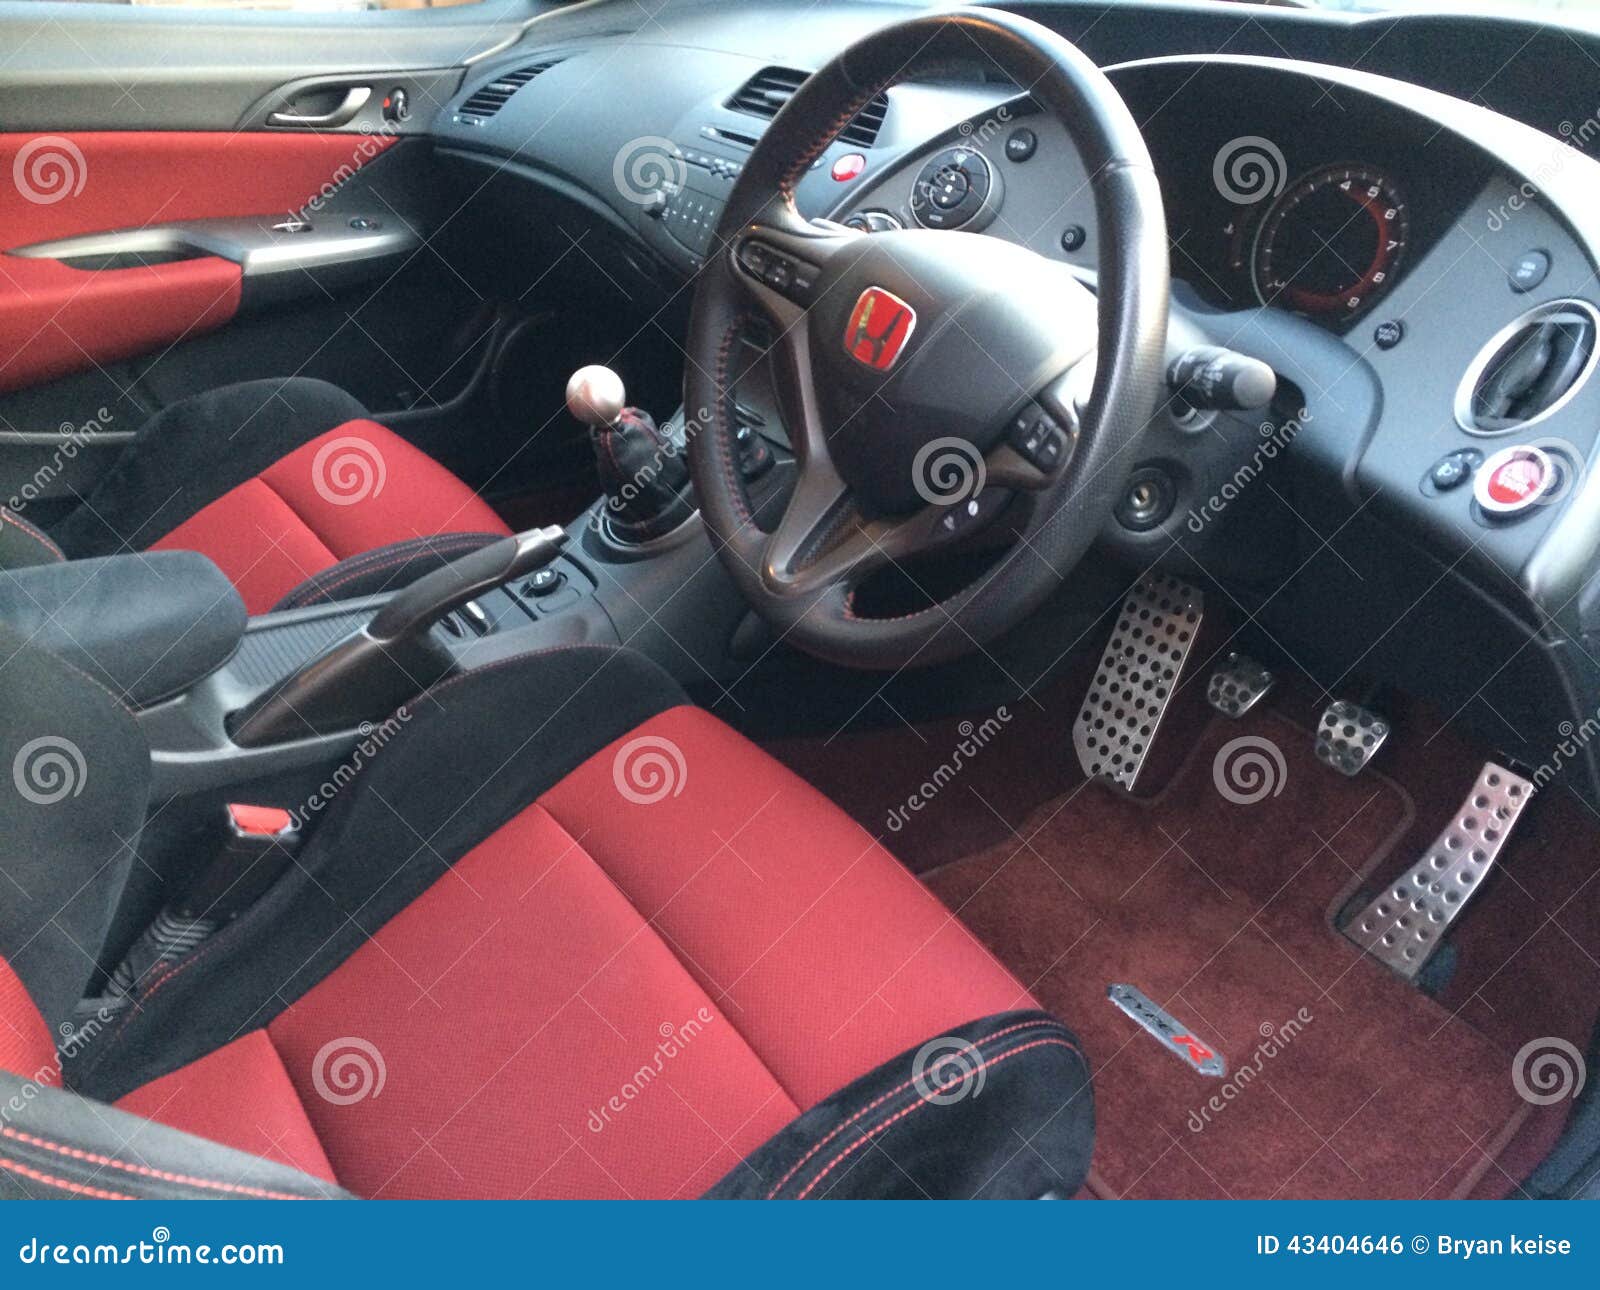 Honda Civic Type R Fn2 Interior Stock Photos Download 2